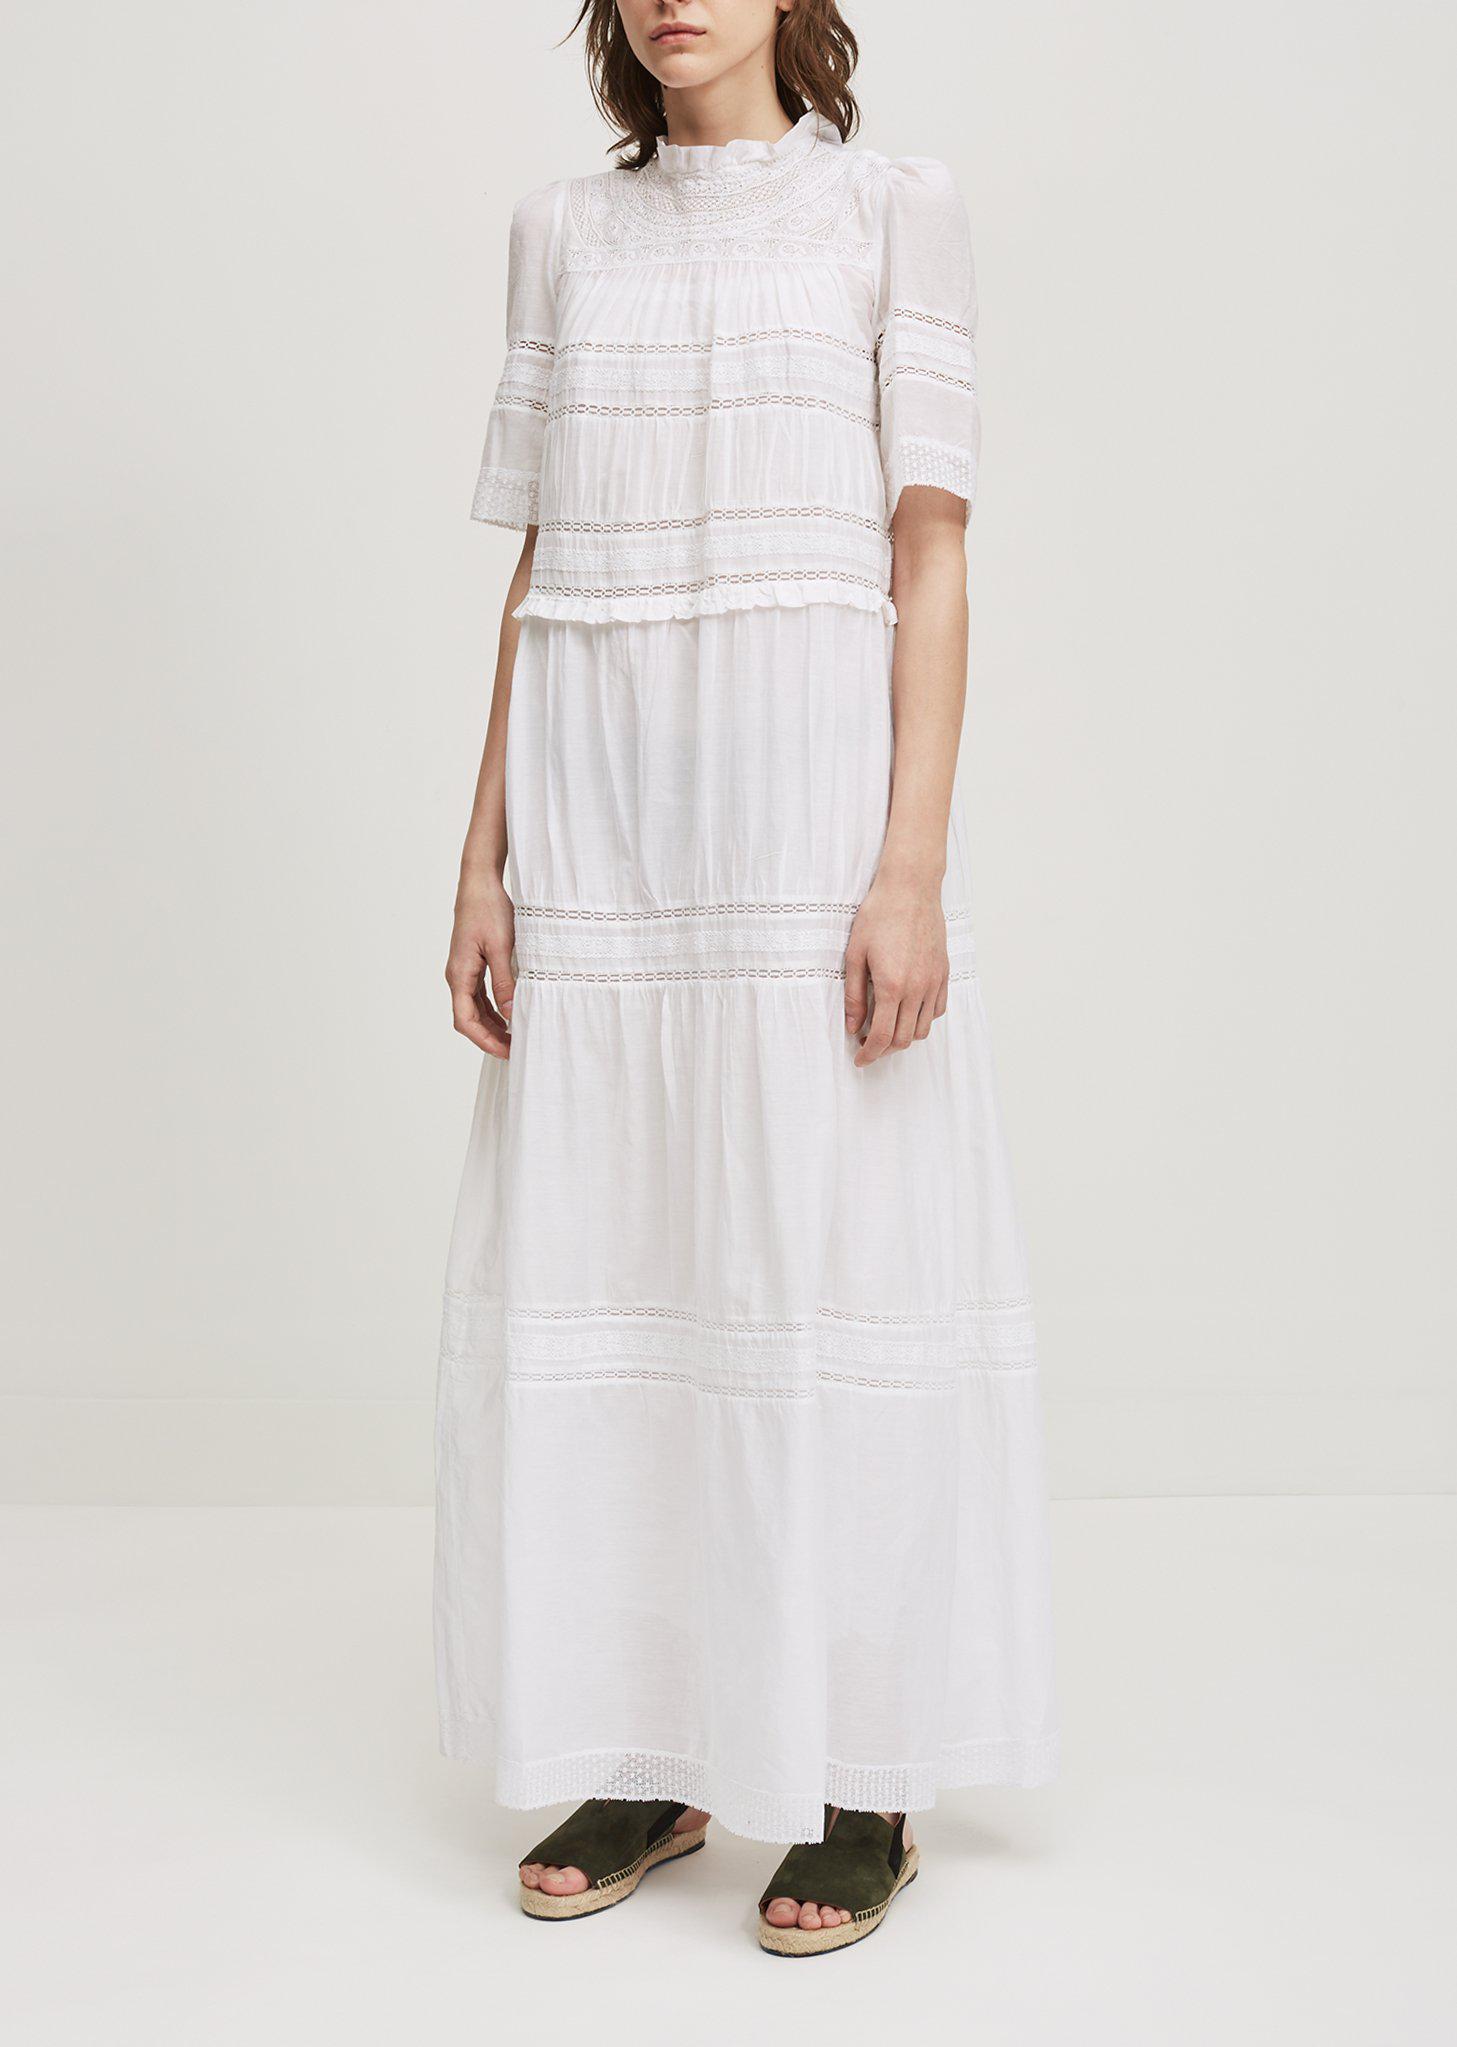 Isabel Marant Etoile White Dress Cheapest Online, 68% OFF | edac.com.au